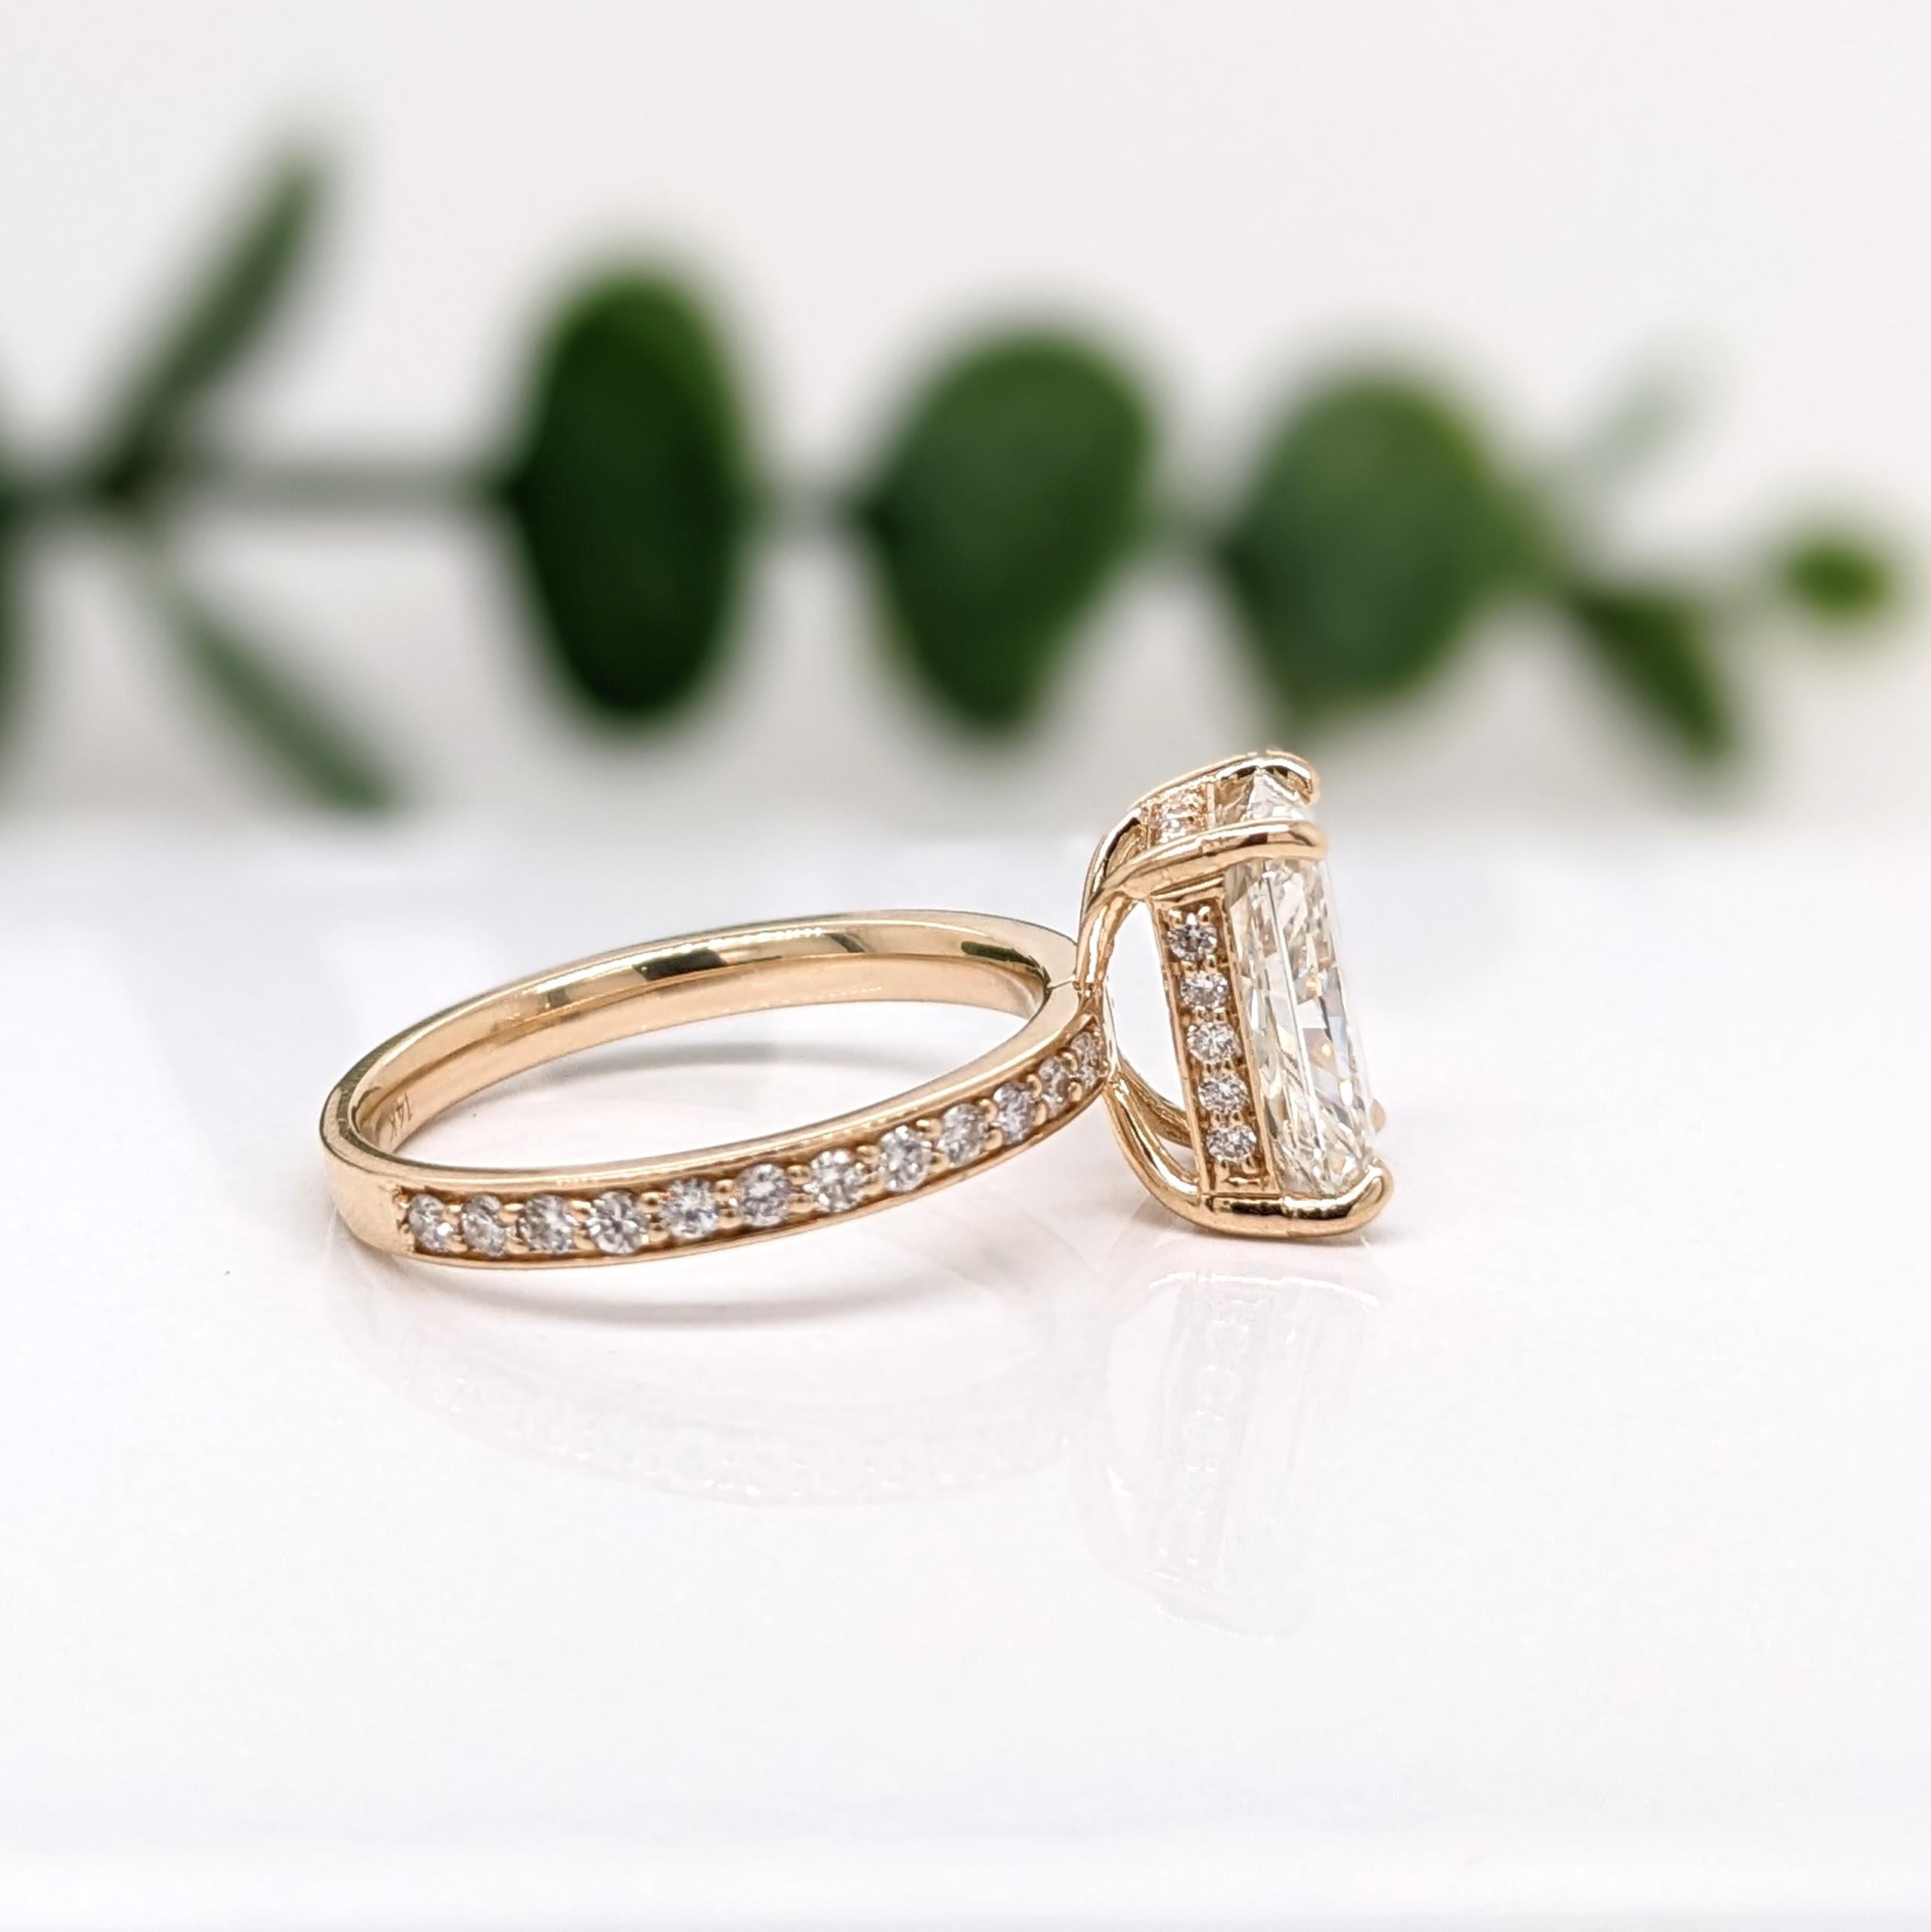 Ring Semi Mount w Natural Diamonds in Solid 14K Gold Emerald Cut 10.5x7mm